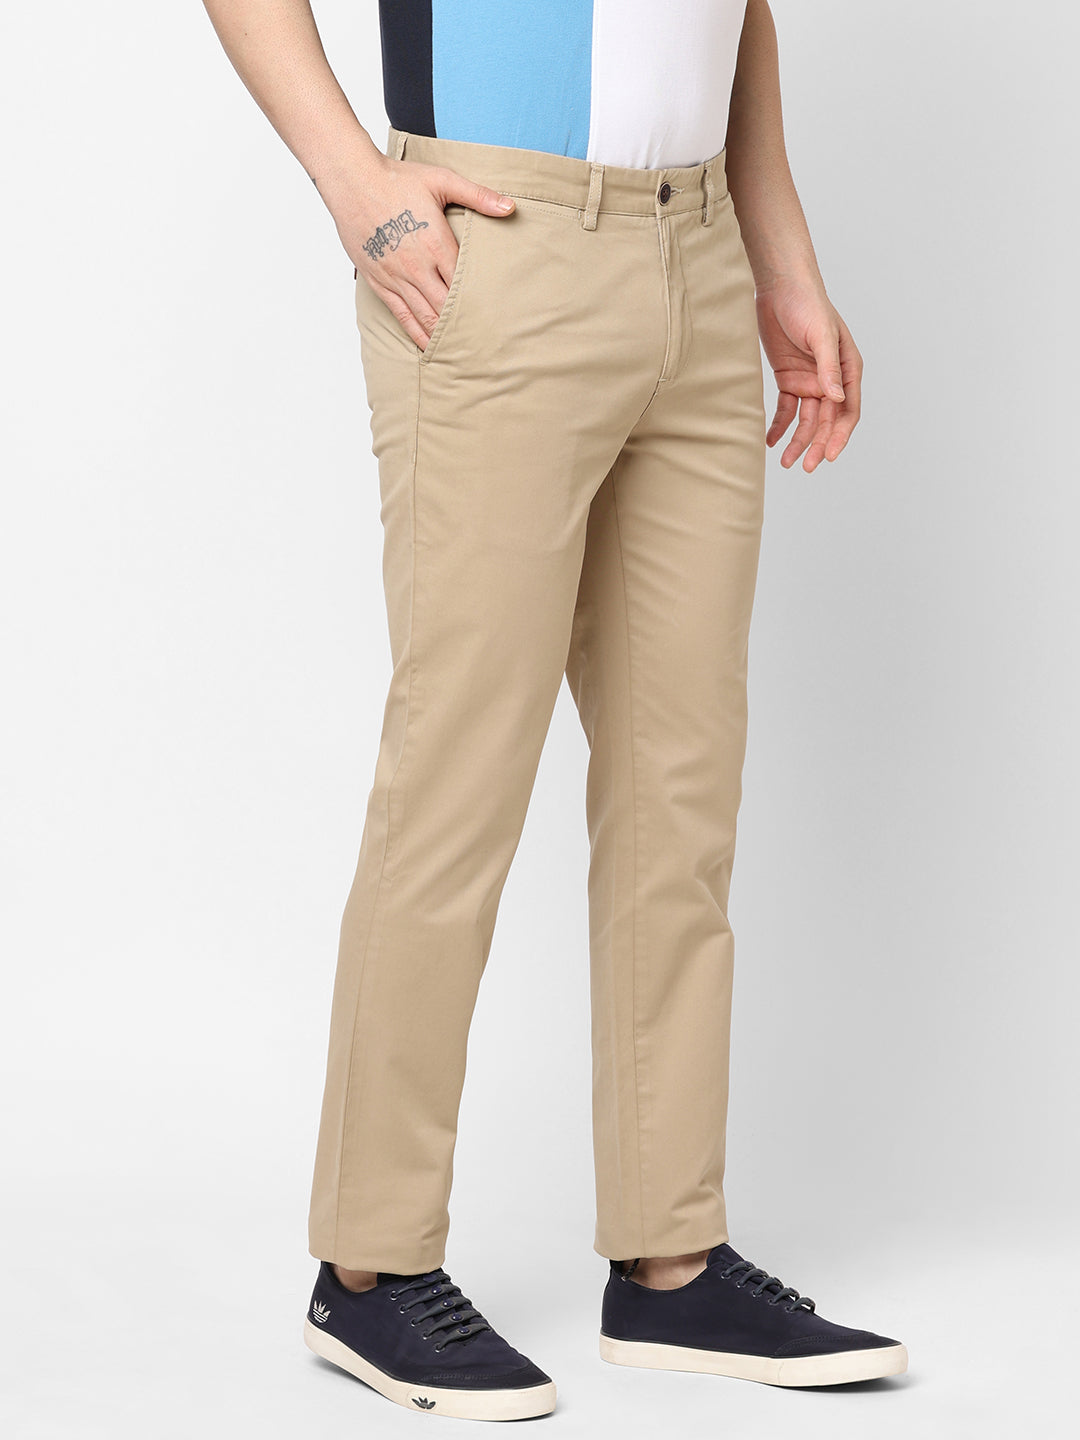 Buy Mens Cotton Lycra Casual Wear Slim Fit Pants